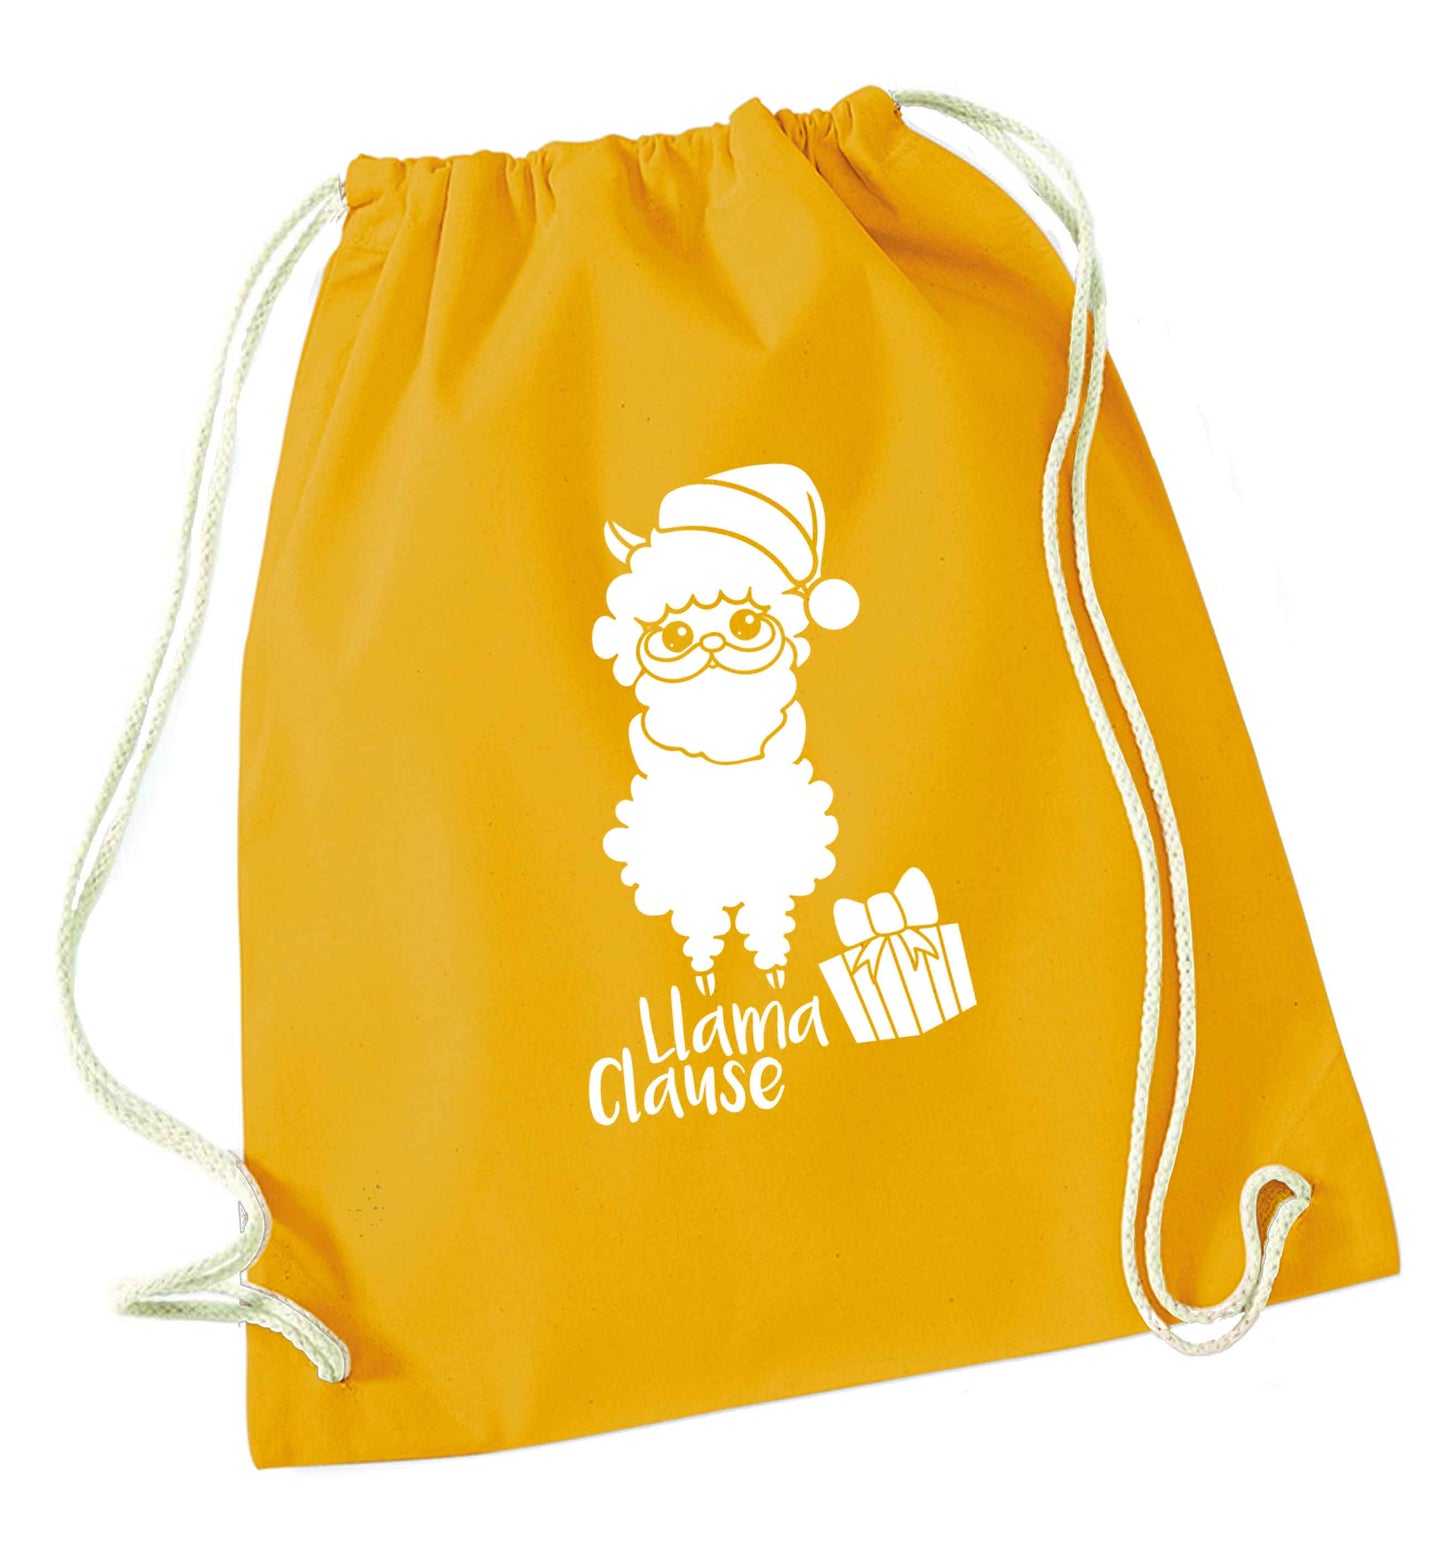 Llama Clause mustard drawstring bag